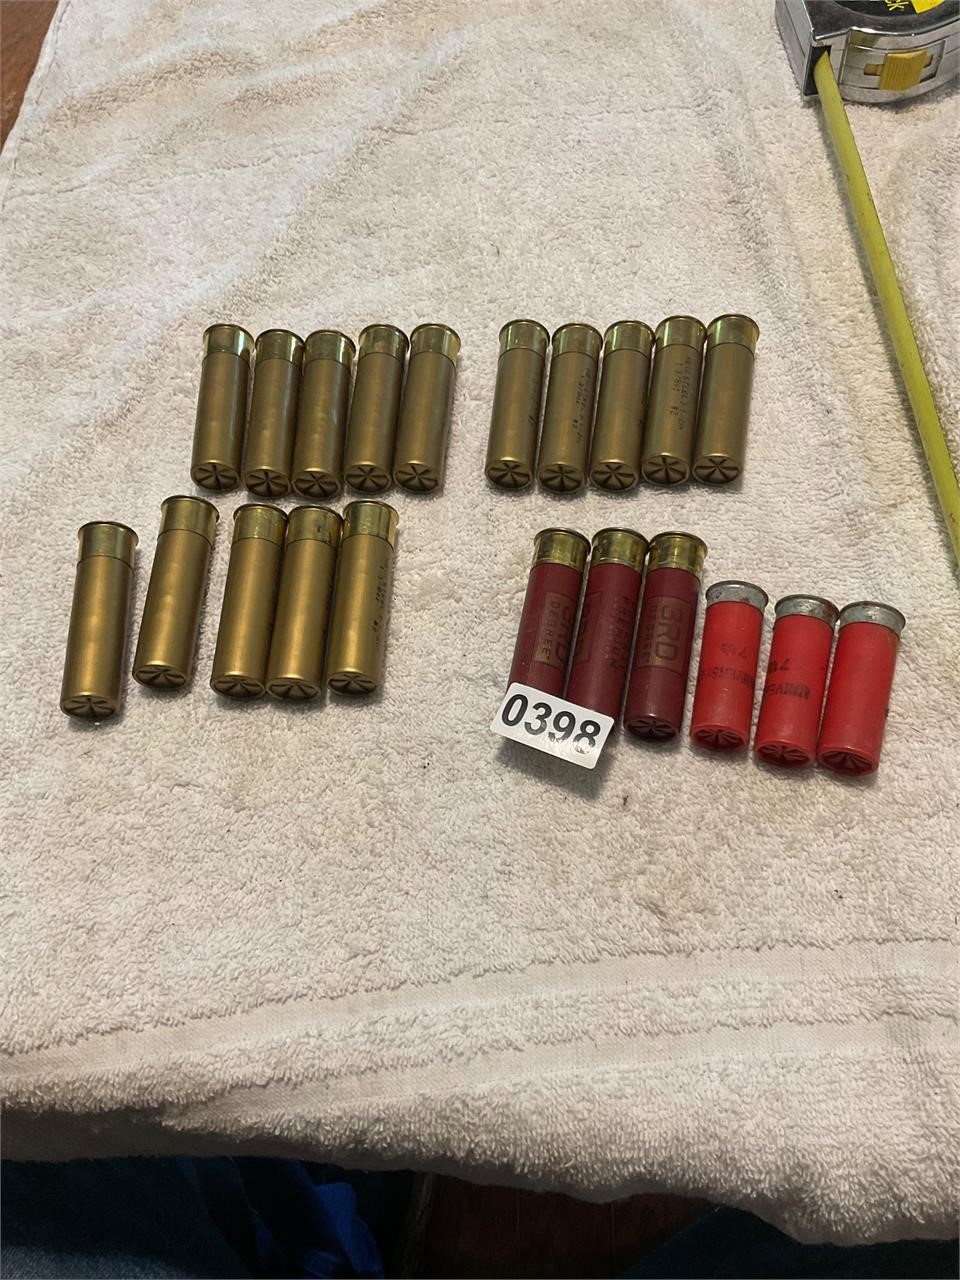 12 gauge ammo- 21 assorted shells